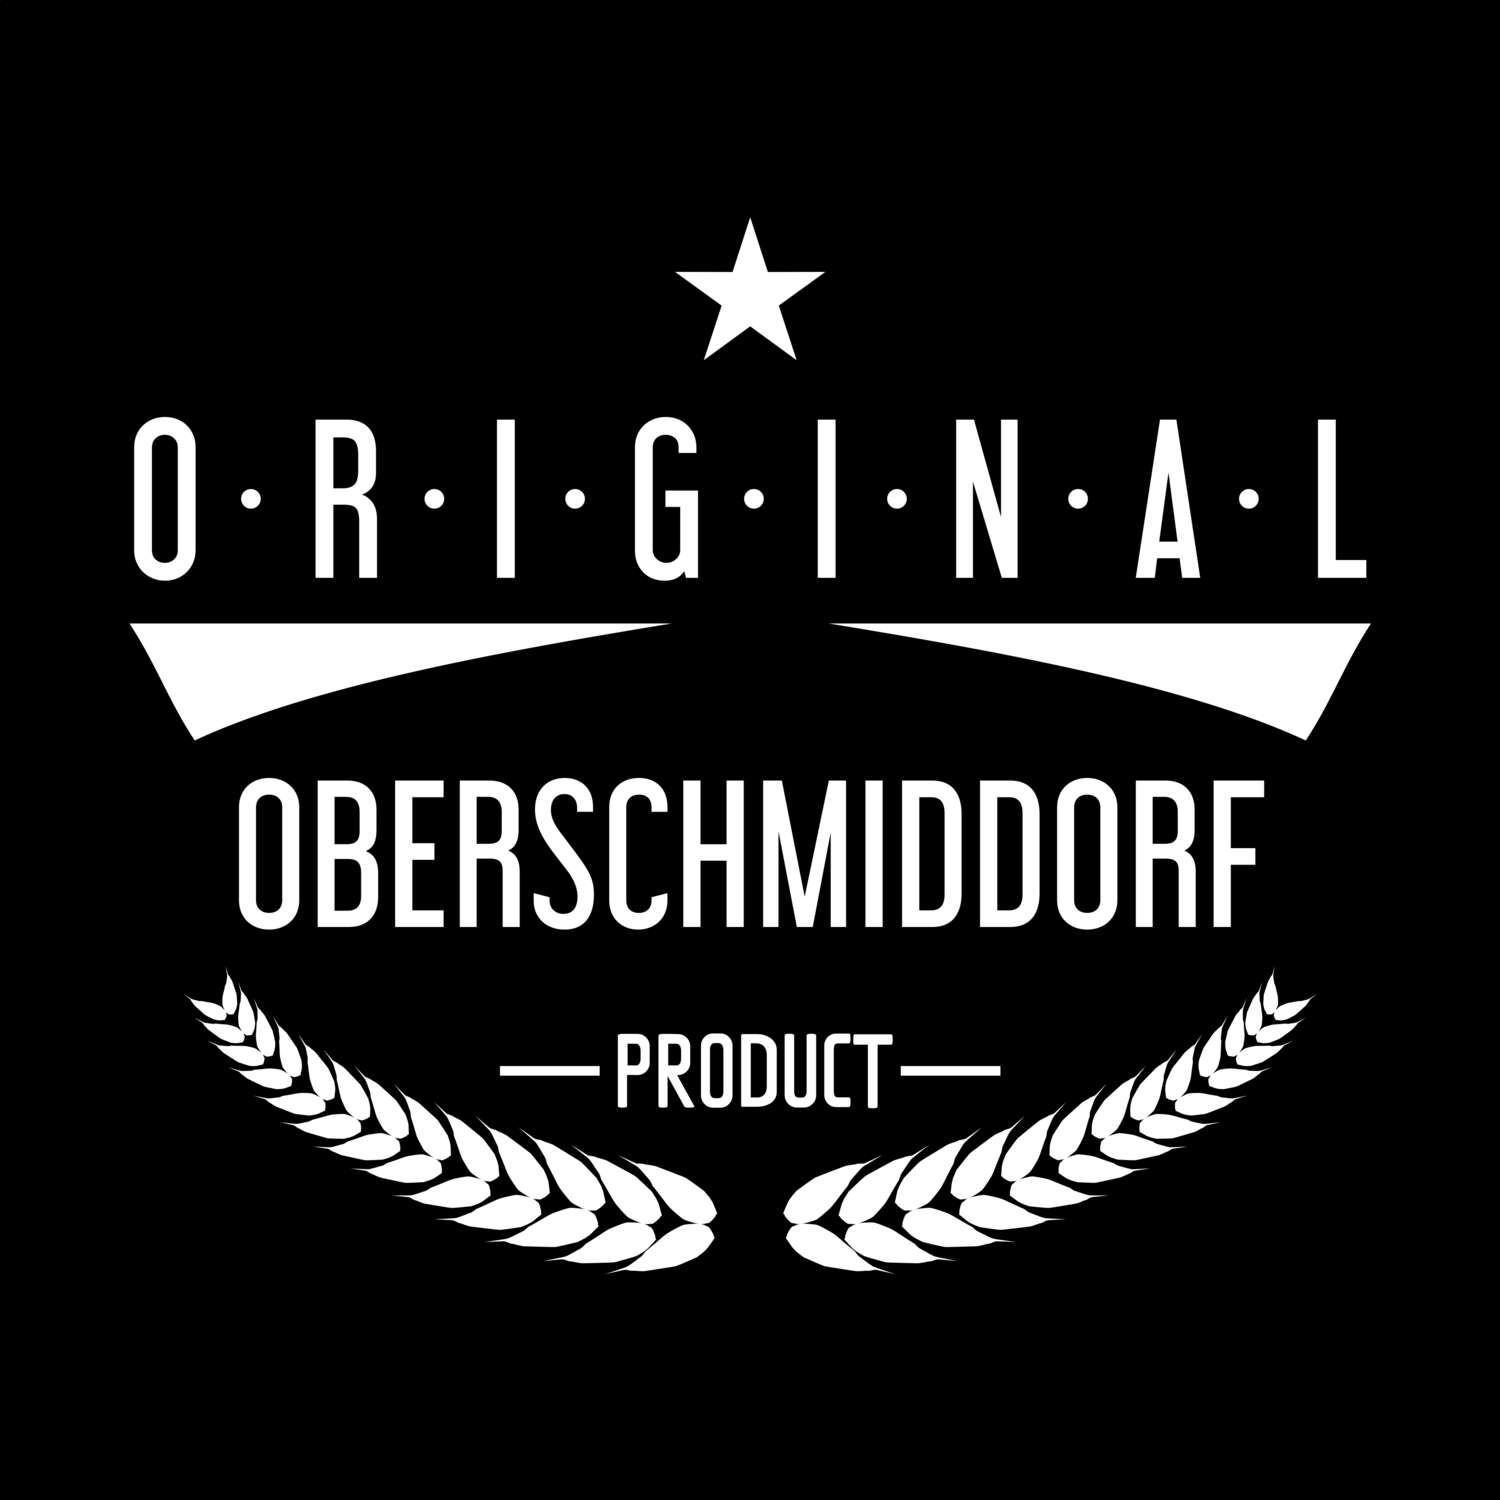 Oberschmiddorf T-Shirt »Original Product«